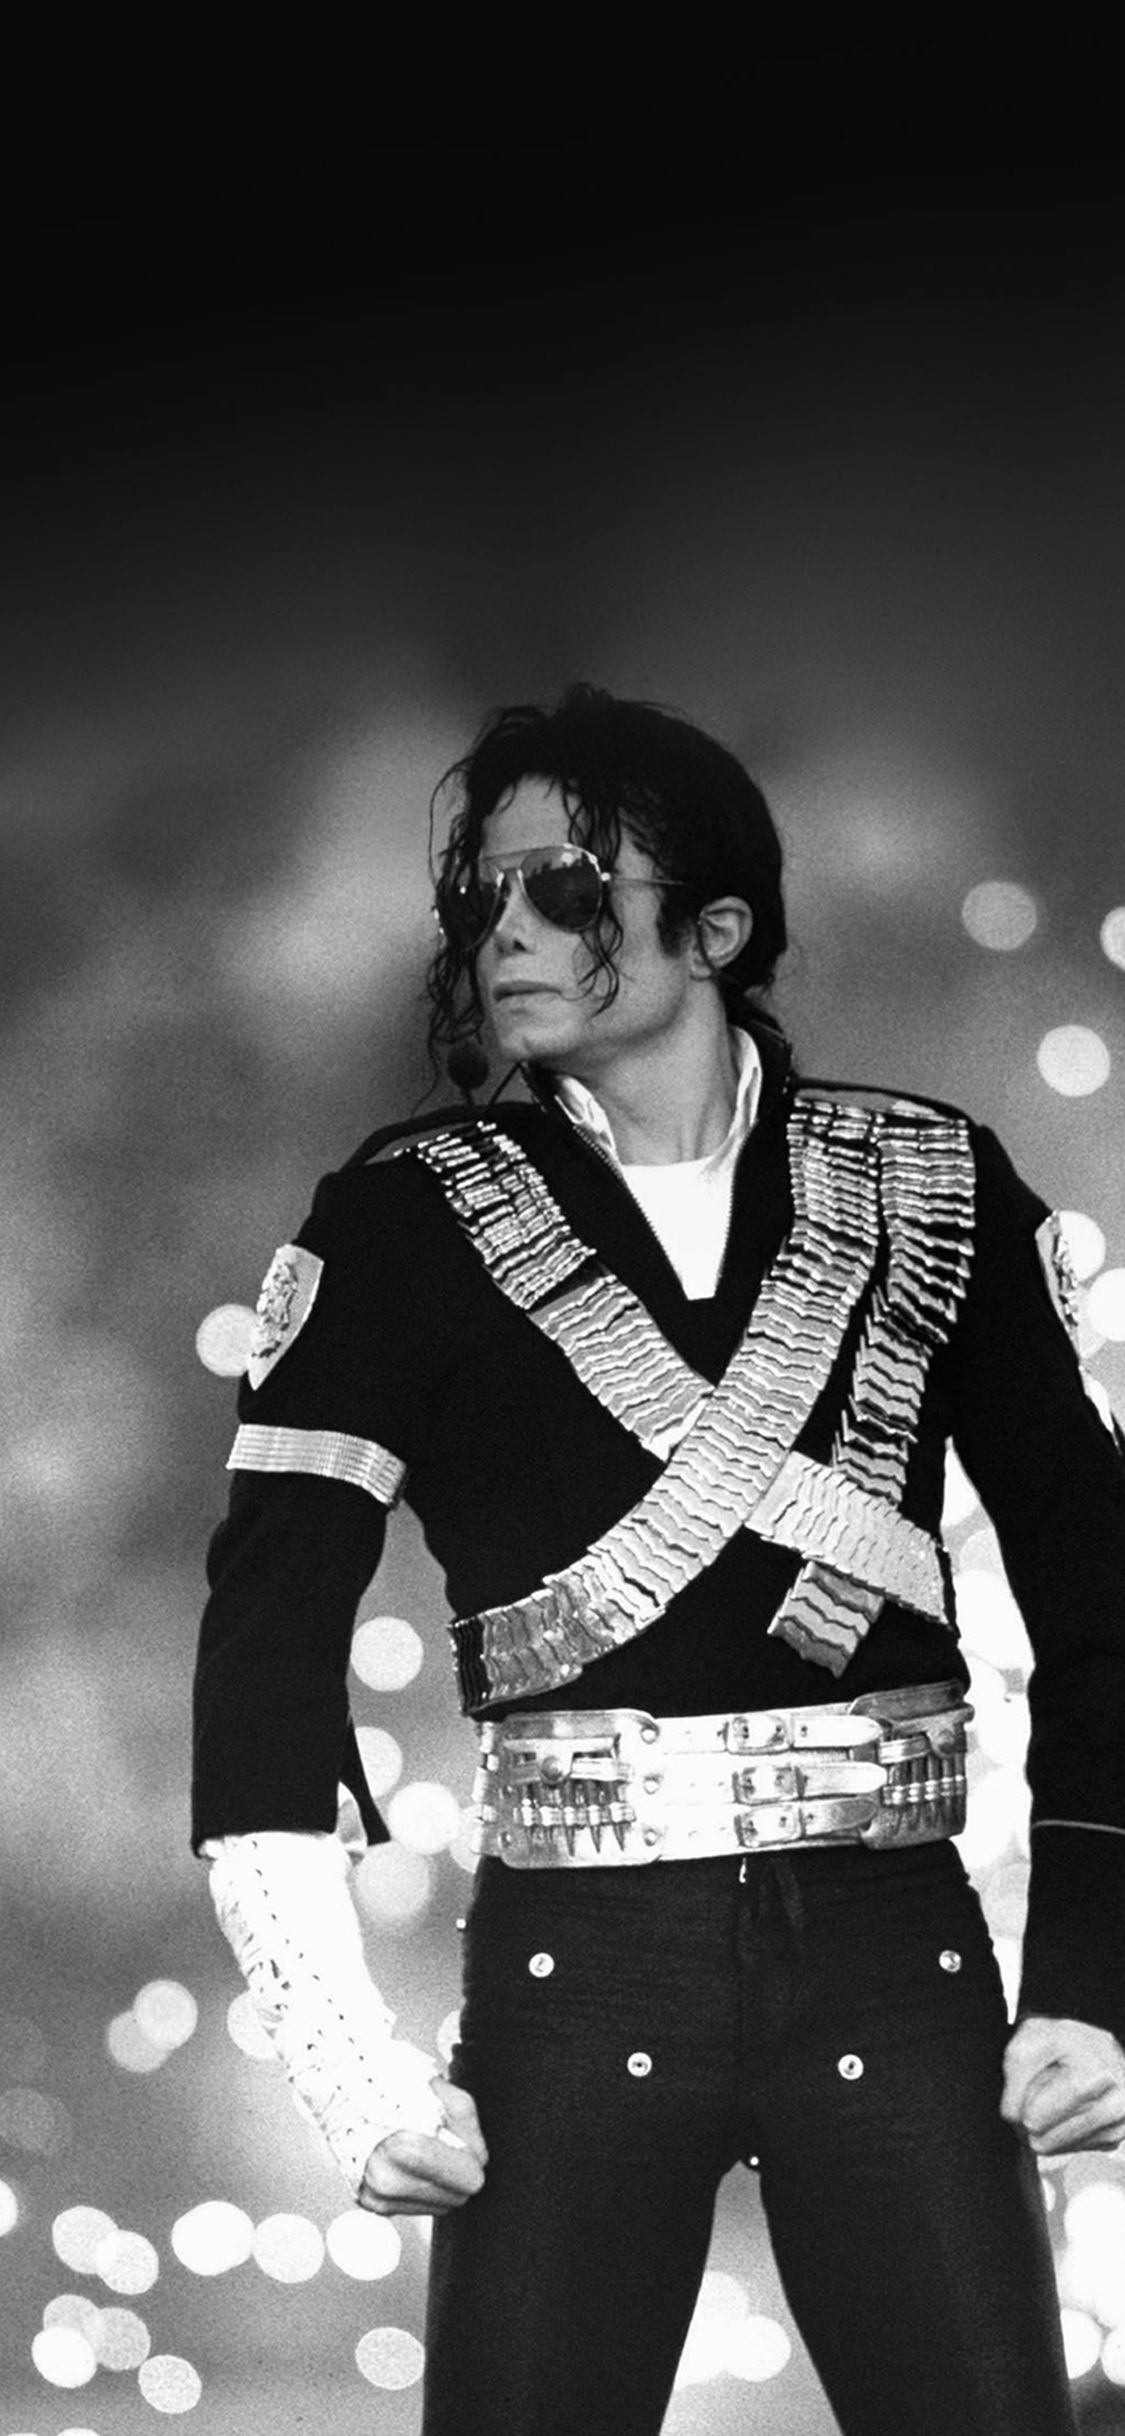 Michael Jackson Bw Concert King Of Pop iPhone X Wallpaper Free Download